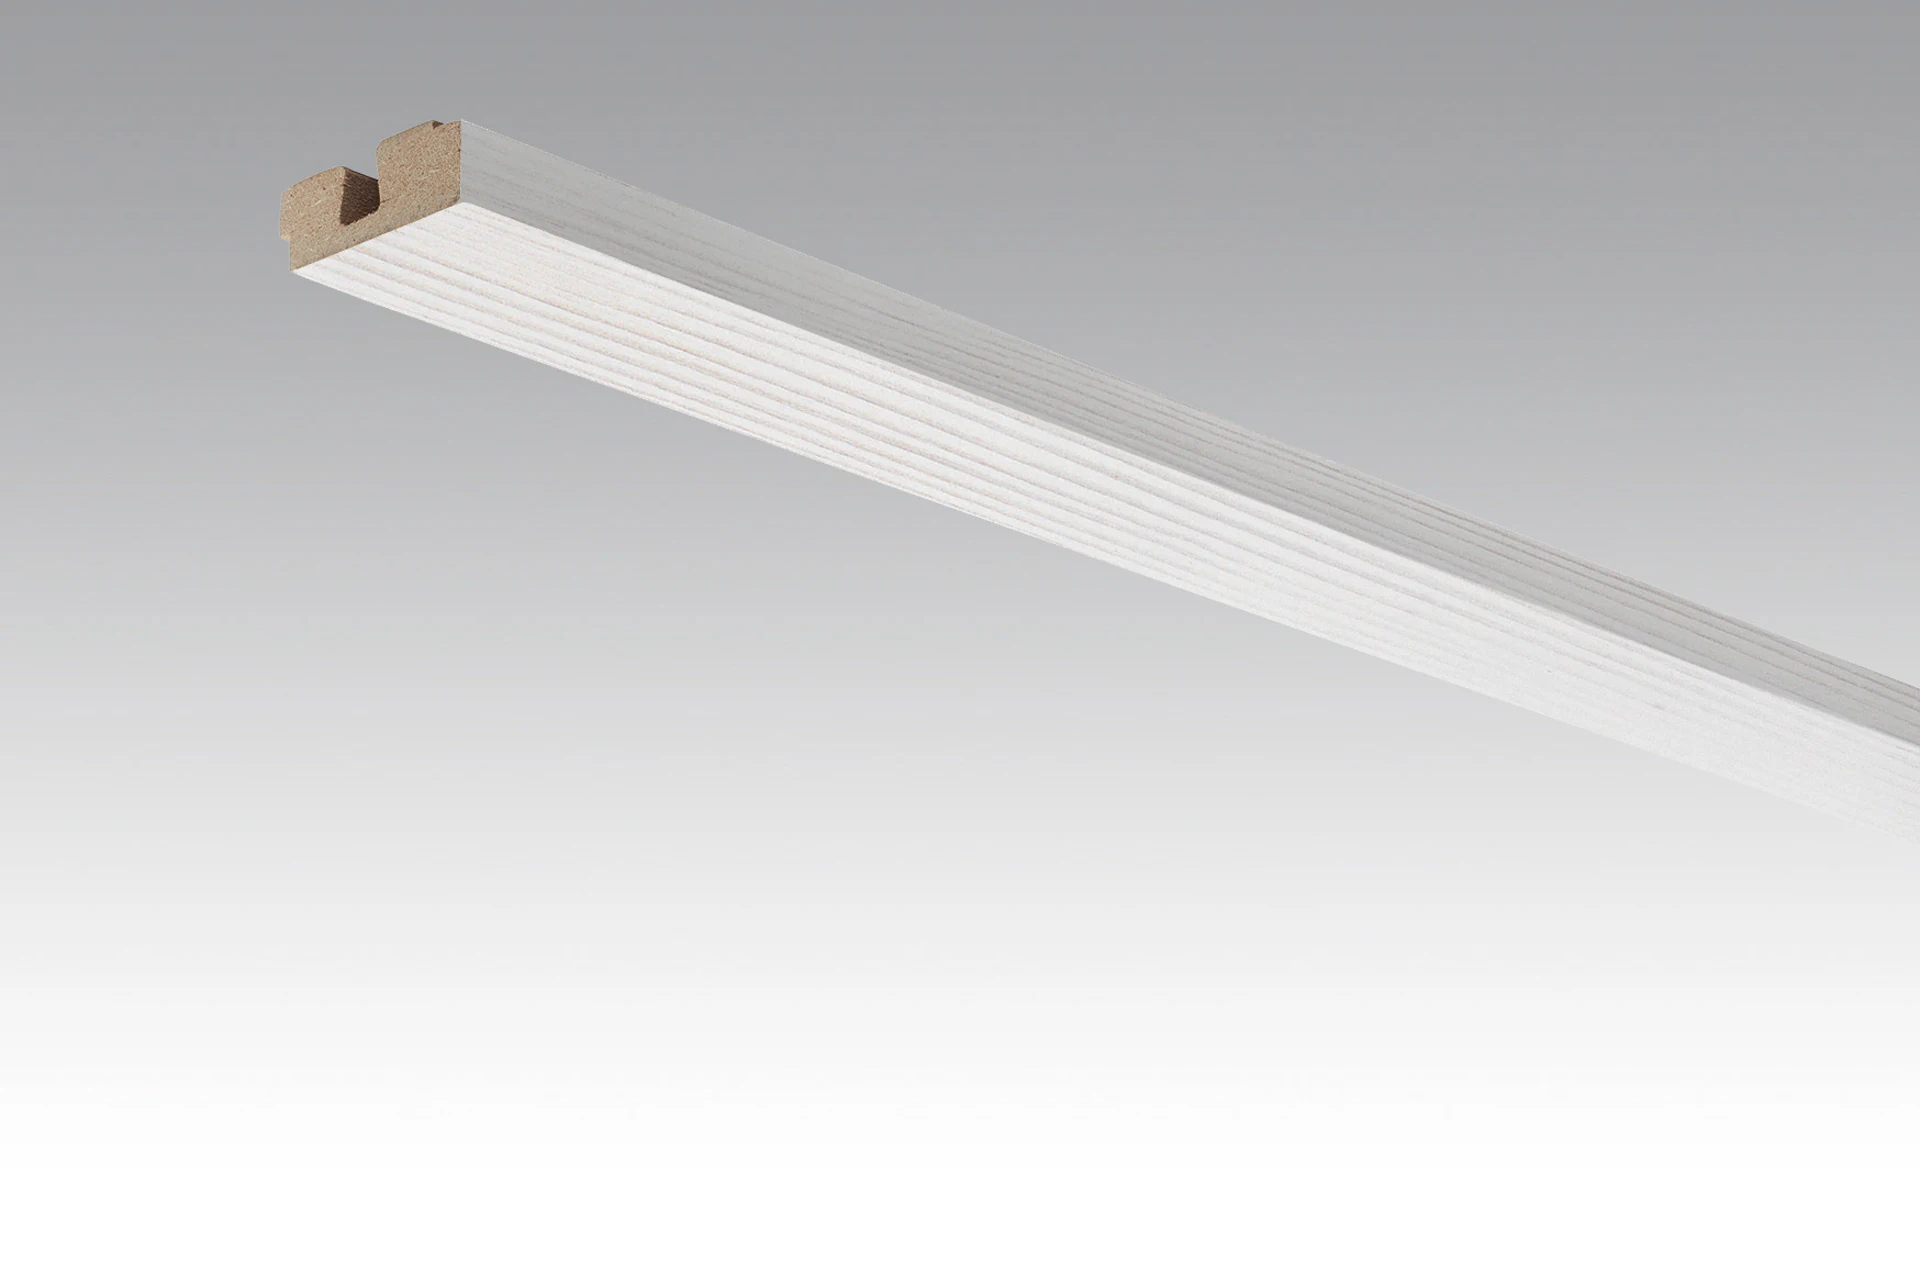 MEISTER Skirtings Ceiling trims Pine white 4005 - 2380 x 40 x 15 mm (200032-2380-04005)